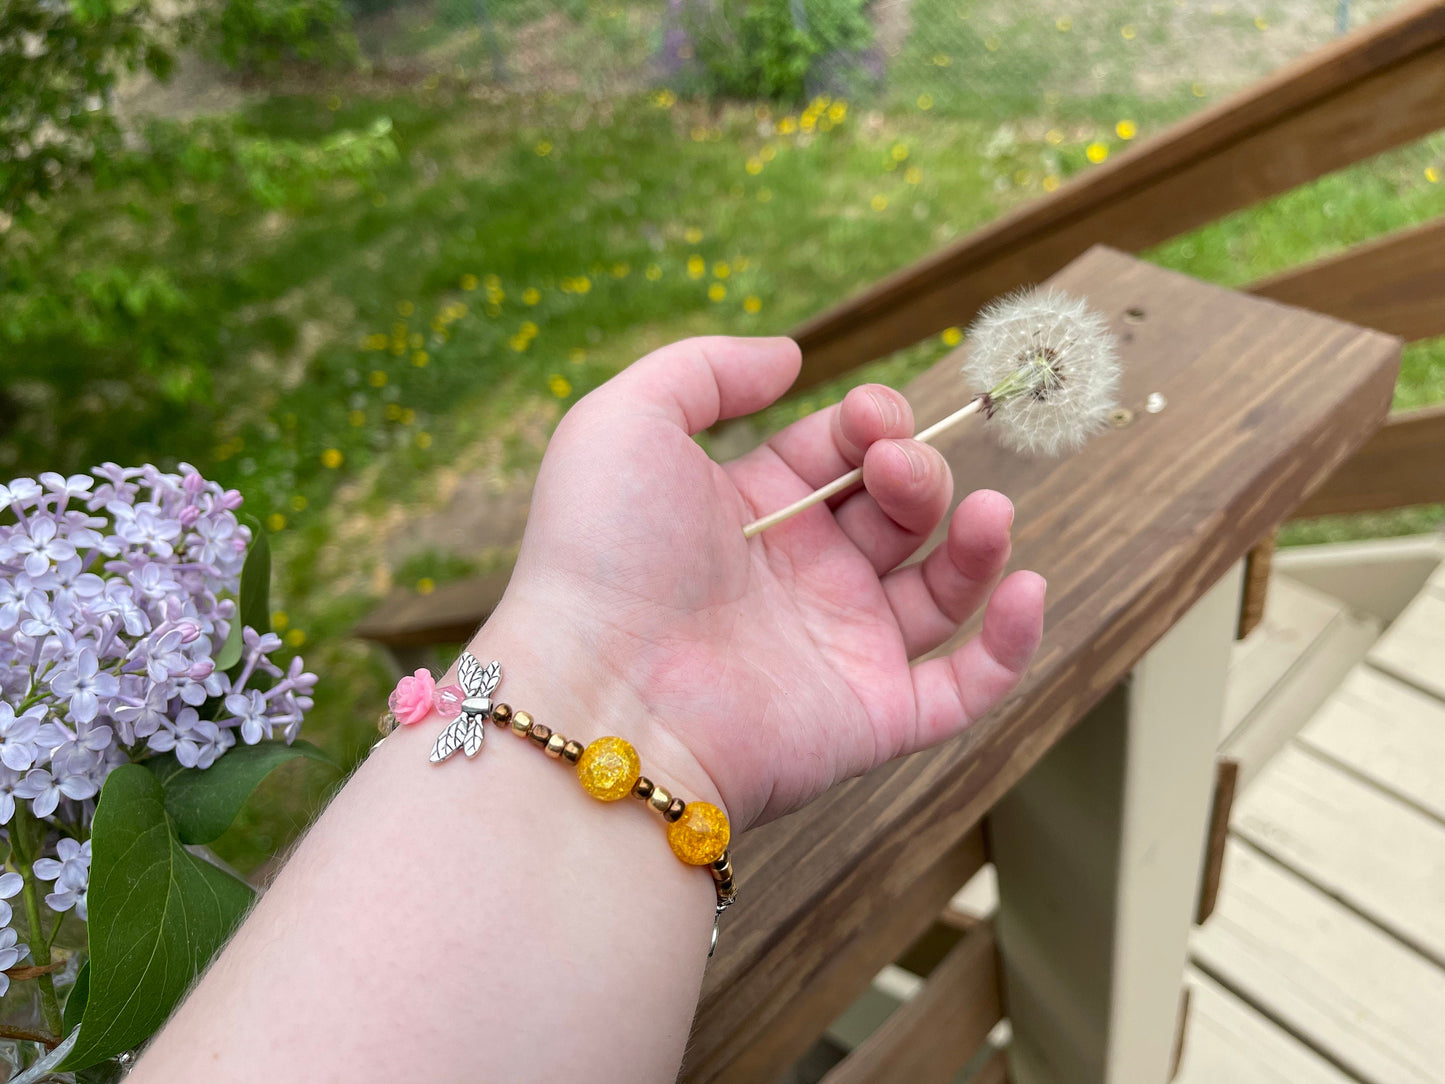 Honey and Flowers Bumblebee Bracelet and Earrings Set